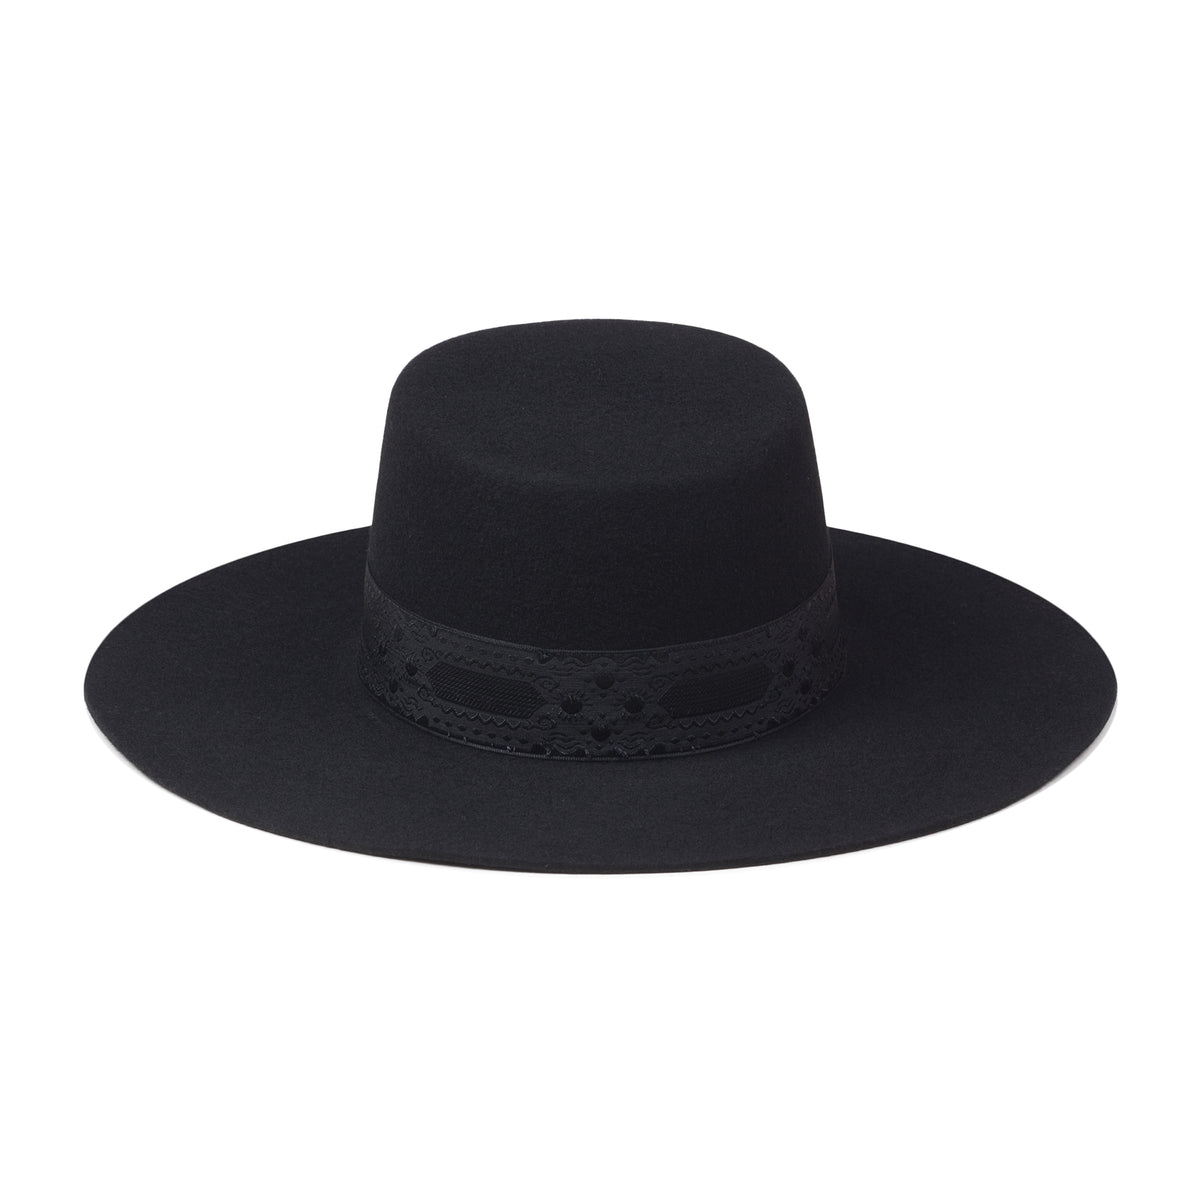 The Sierra - Wool Felt Boater Hat in Black | Lack of Color US